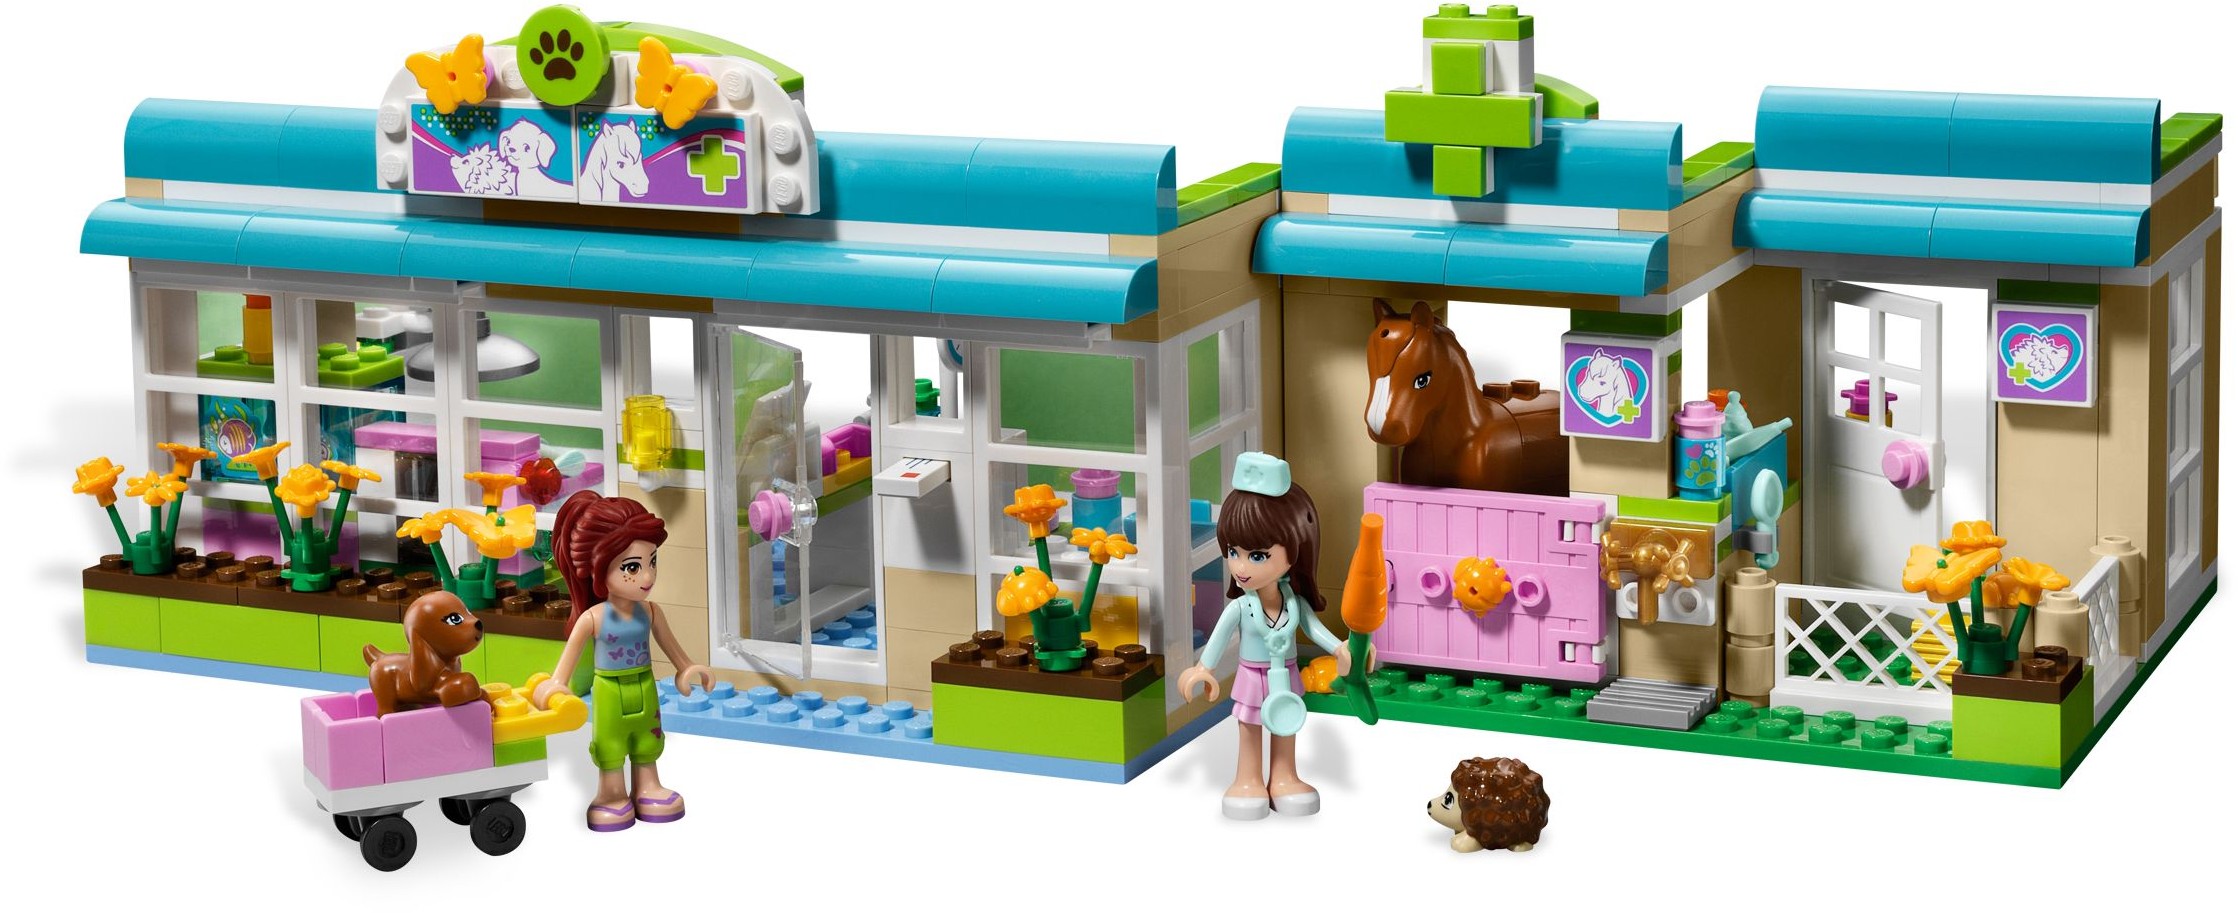 Friends | Brickset: LEGO set guide and 